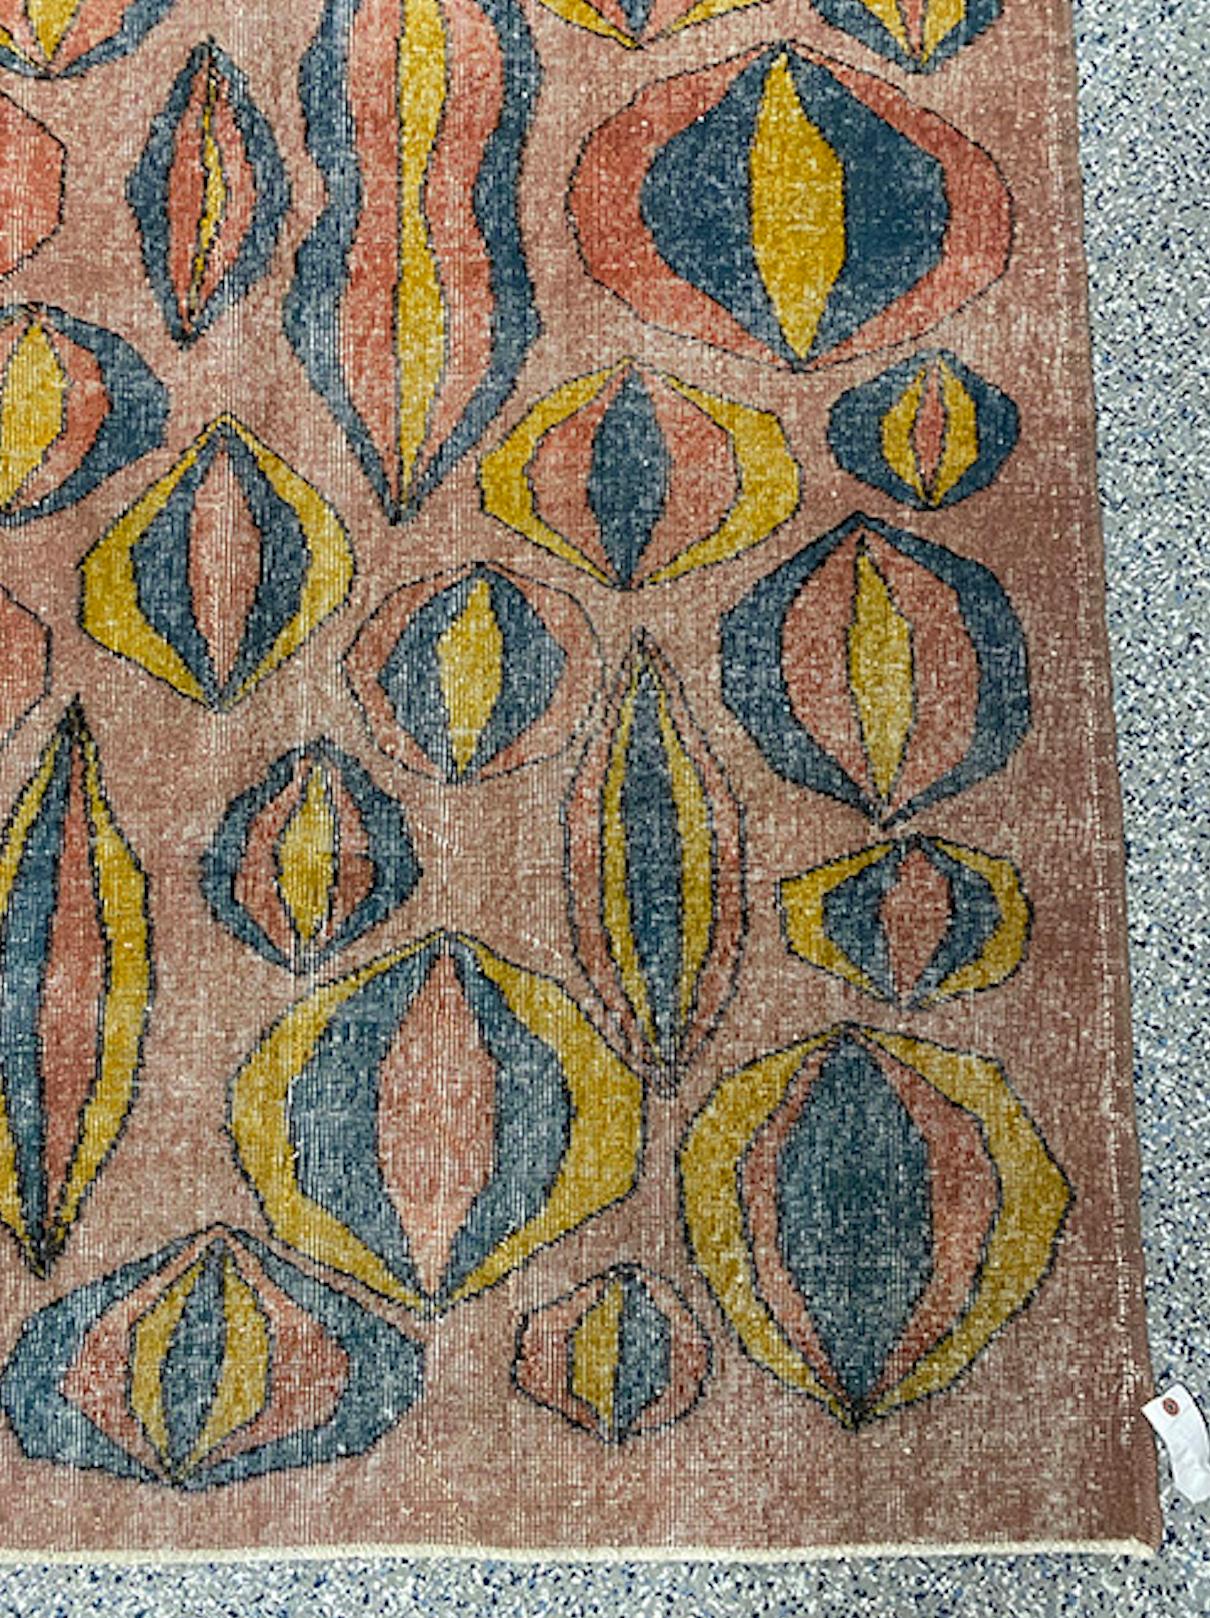 This rug balloons the imagination.

Orgin: Turkey
Dimensions: 5' x 8'
Age: 1950’s
Design: Zeki Müren, Scandinavian
Material: 100% Wool-pile, hand knotted

16478.